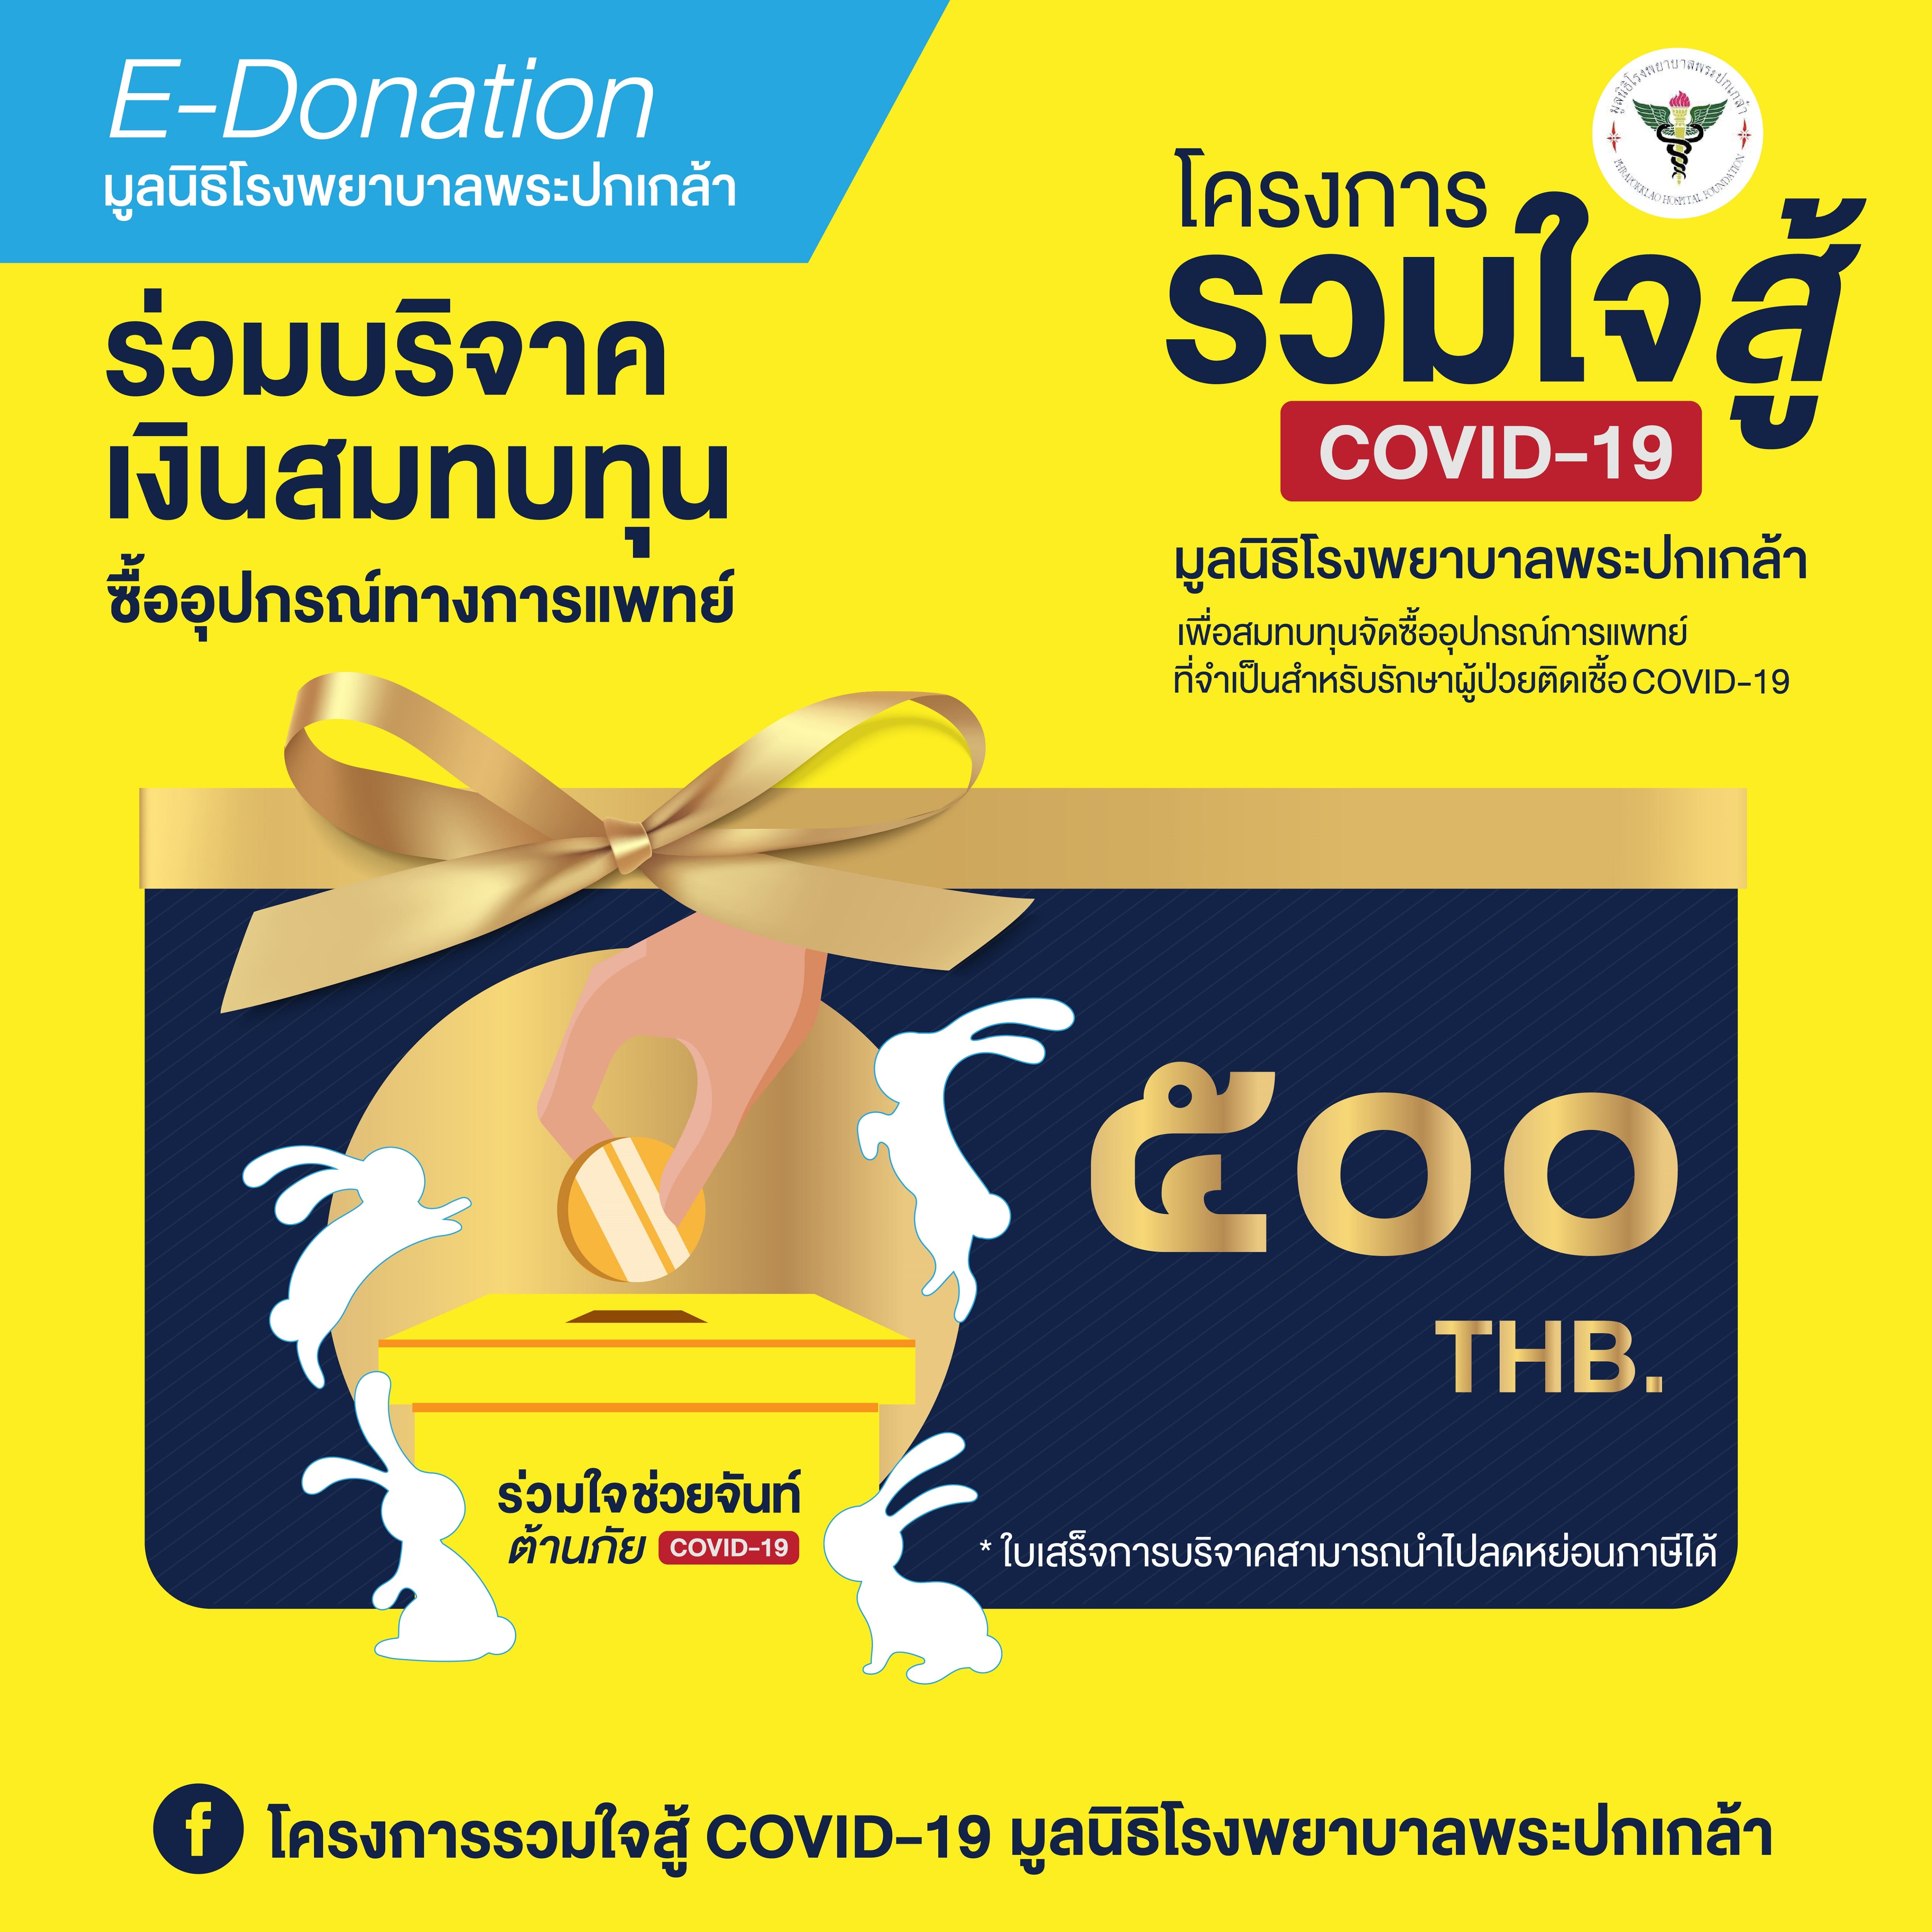 [E-Donation] โครงการป้องกันและช่วยเหลือสถานการณ์แพร่ระบาดของโควิด-19 (Covid-19) มูลนิธิโรงพยาบาลพระปกเกล้า จำนวน 500 บาท